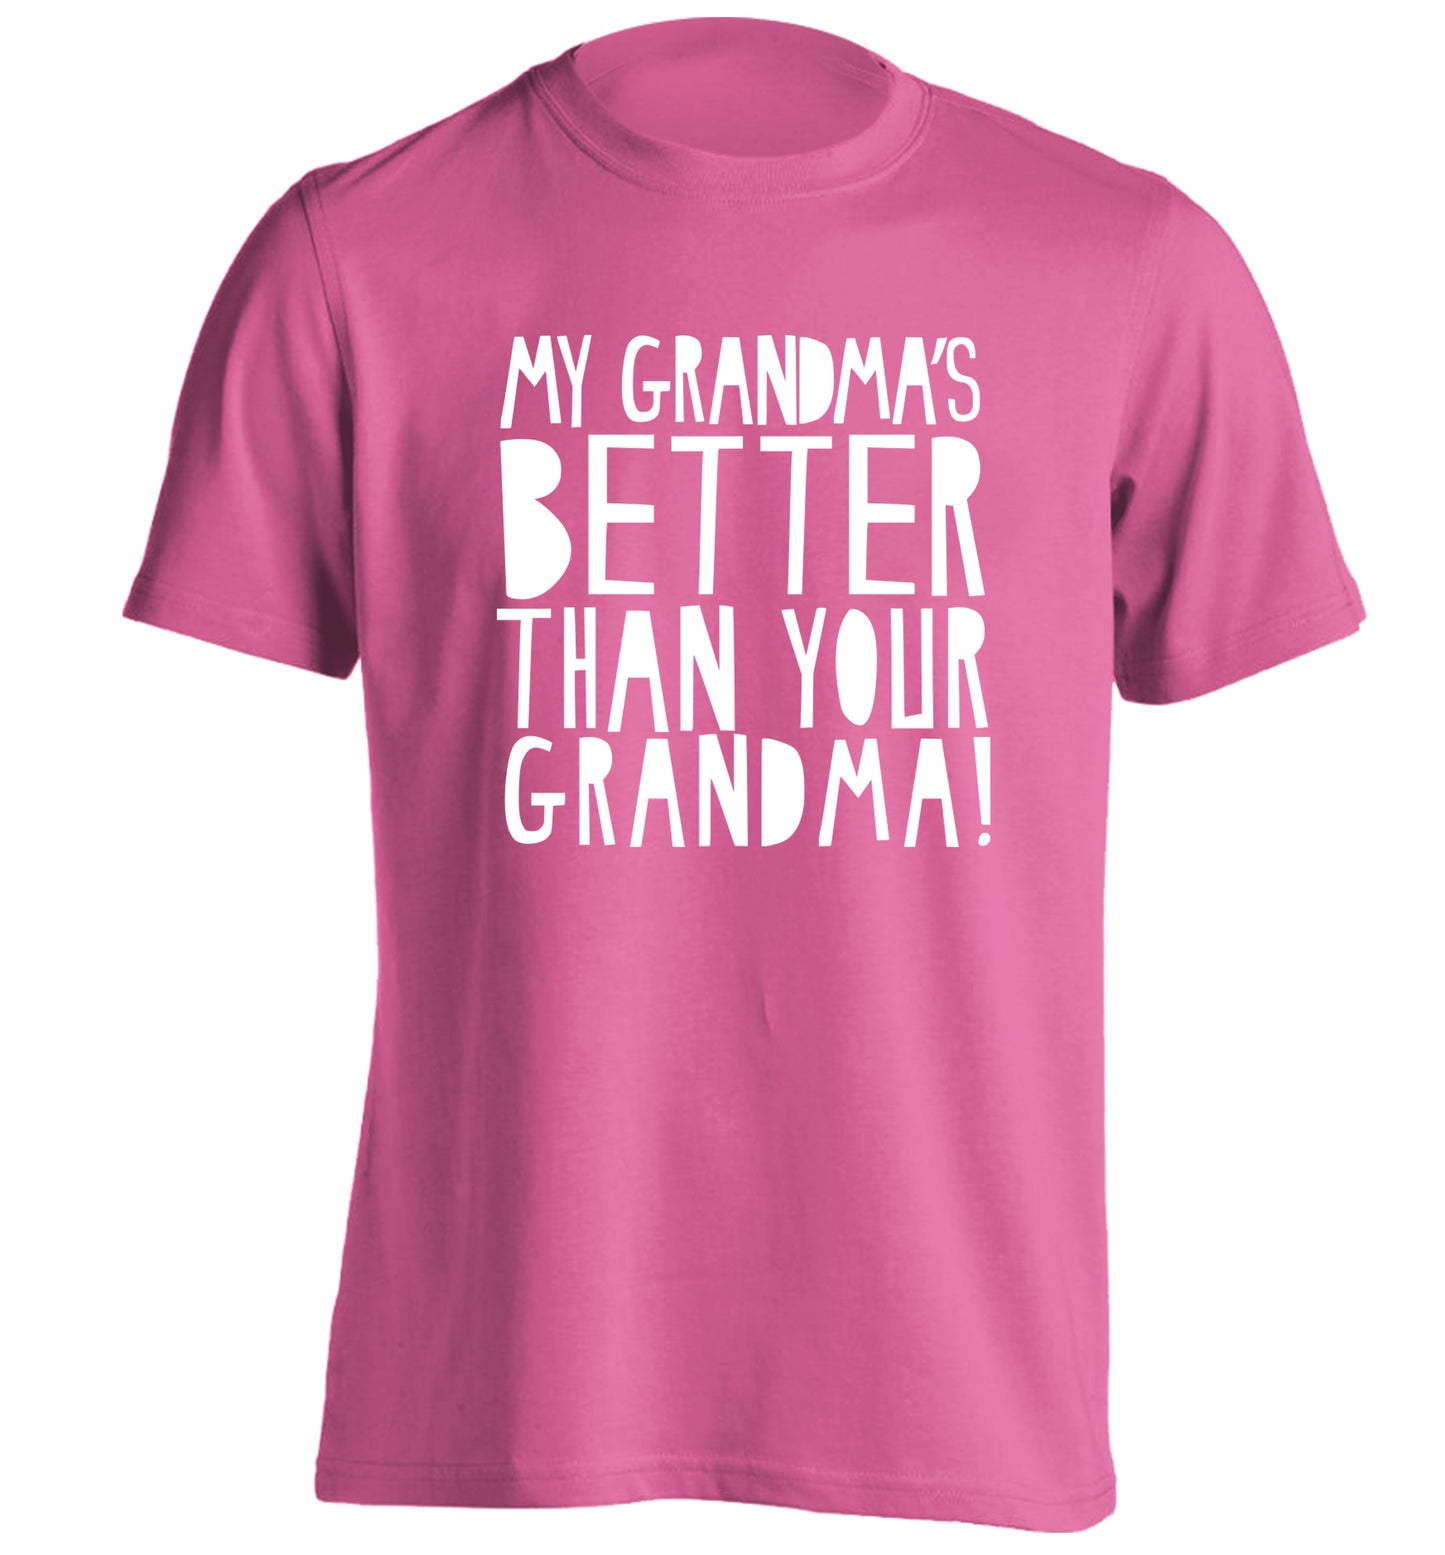 My grandma's better than your grandma adults unisex pink Tshirt 2XL